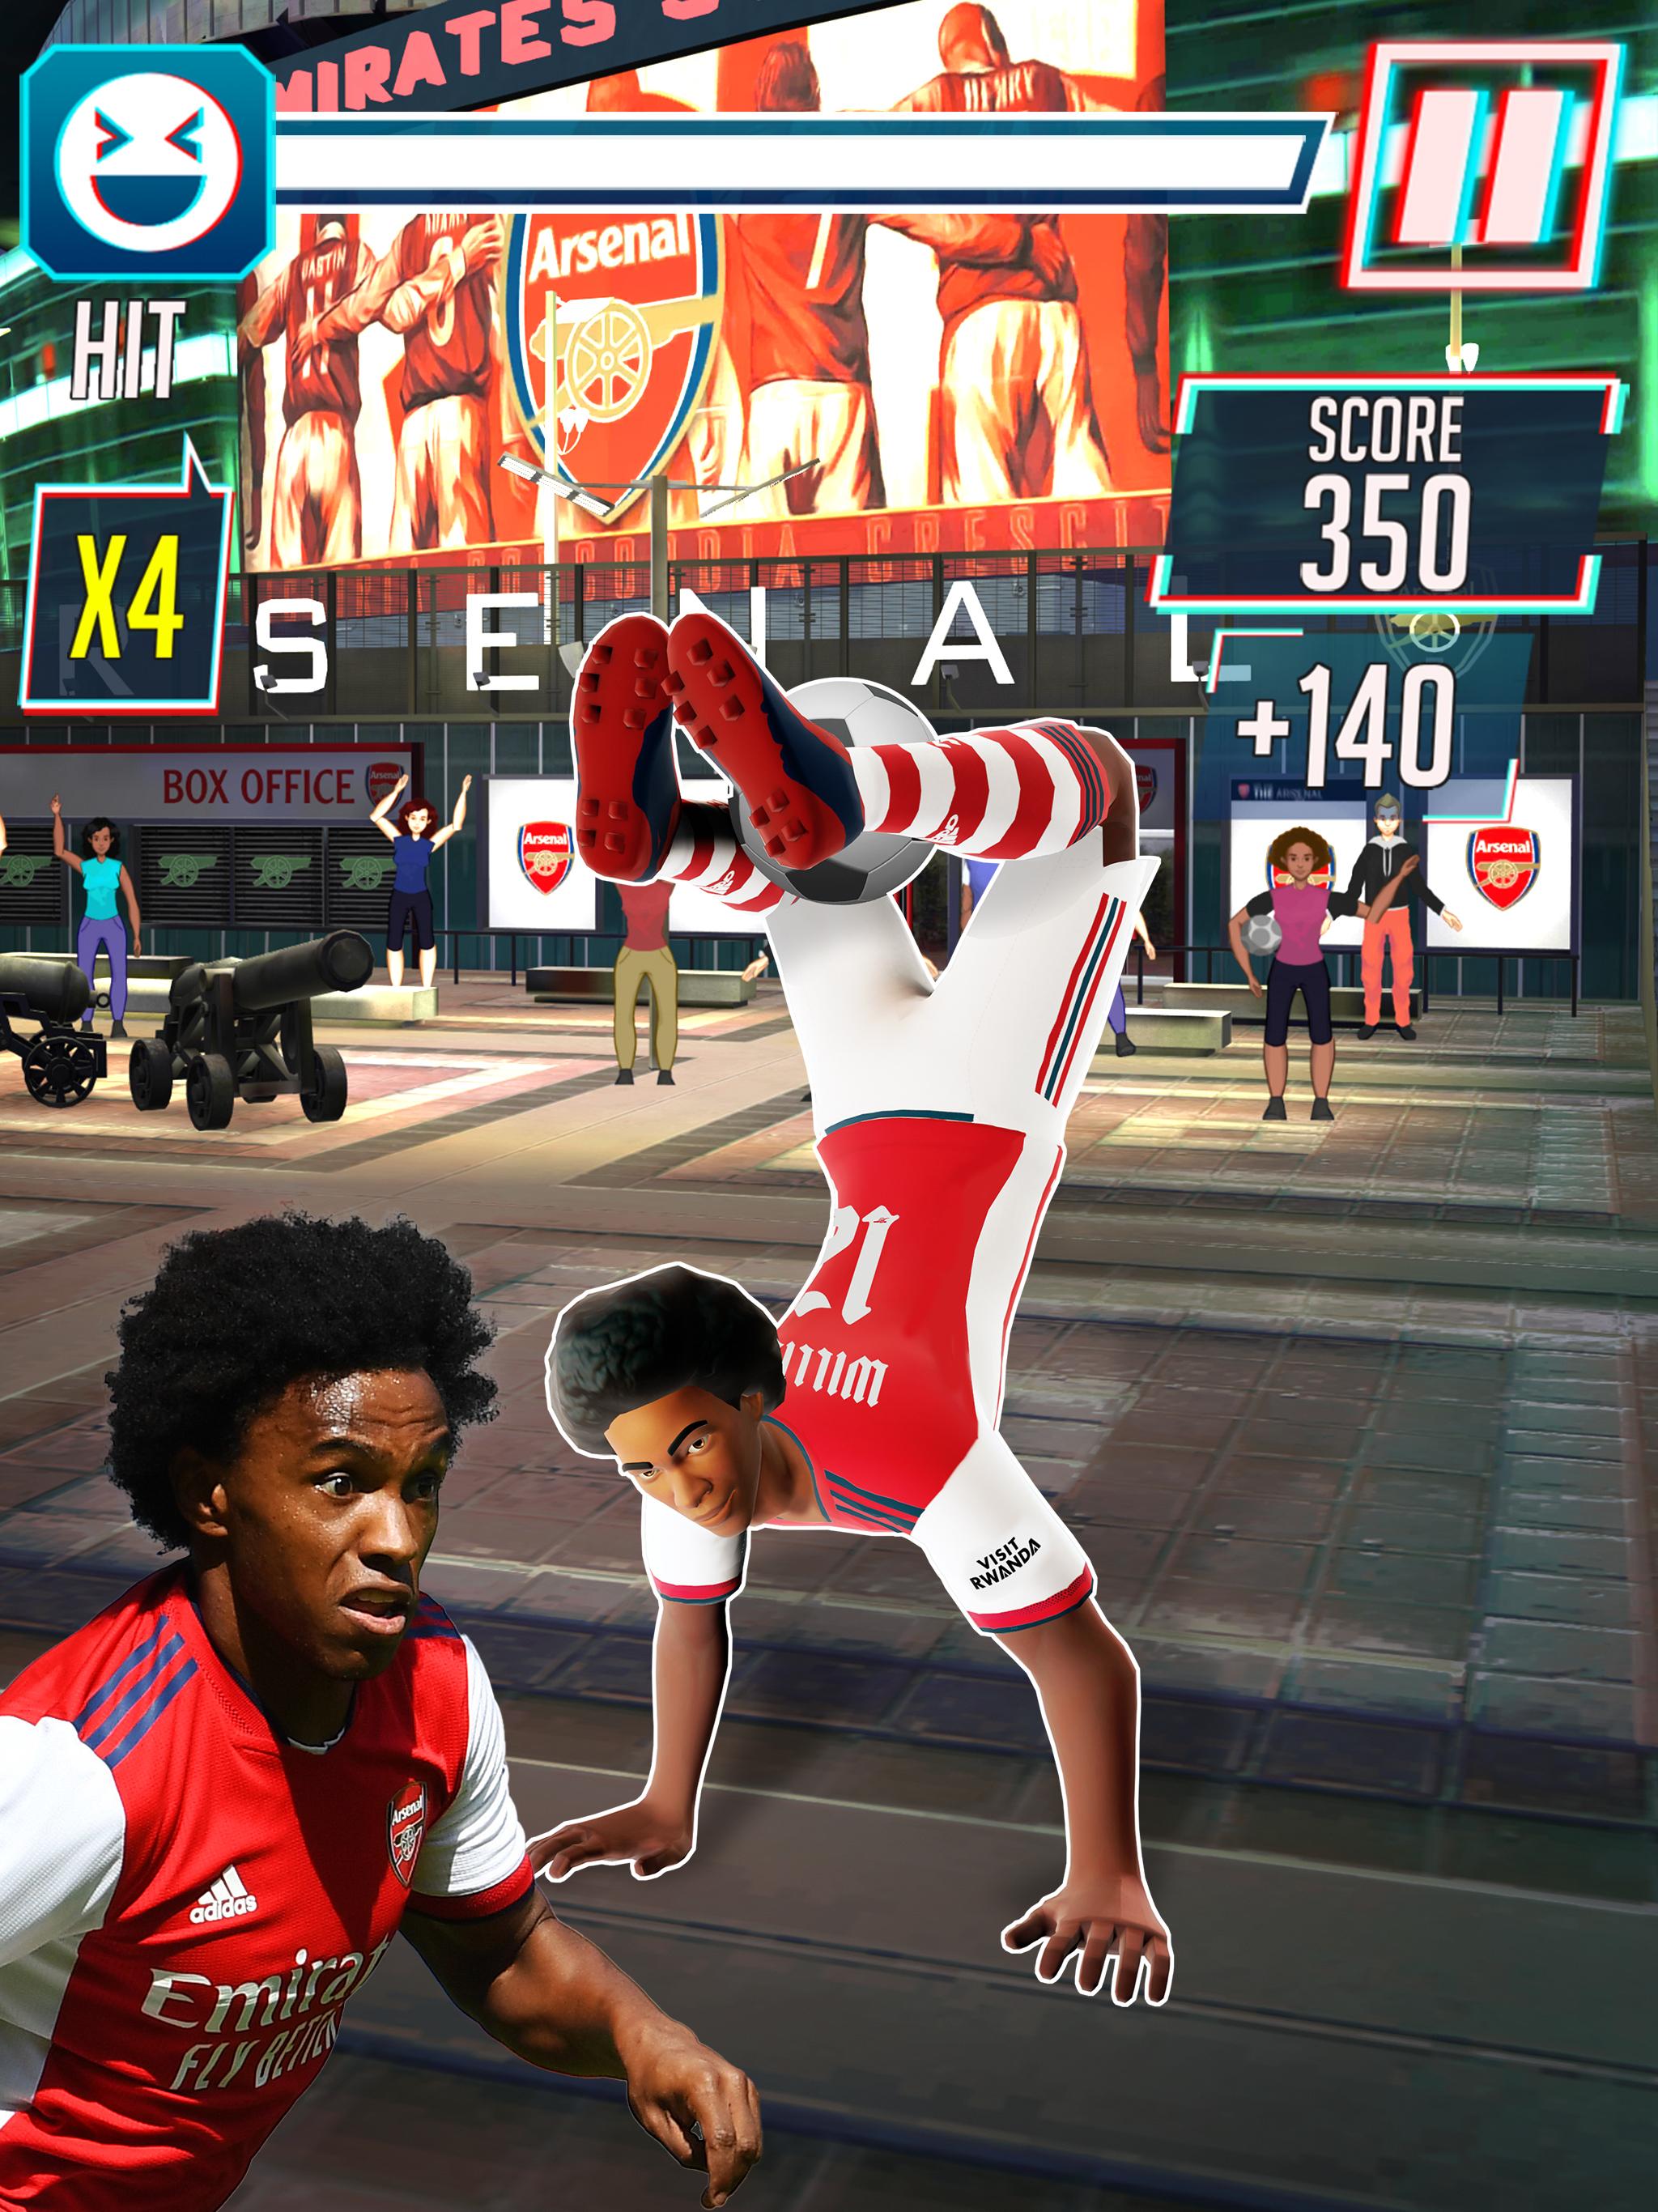 Arsenal Freestyle Show 1.0.6.21 Screenshot 19